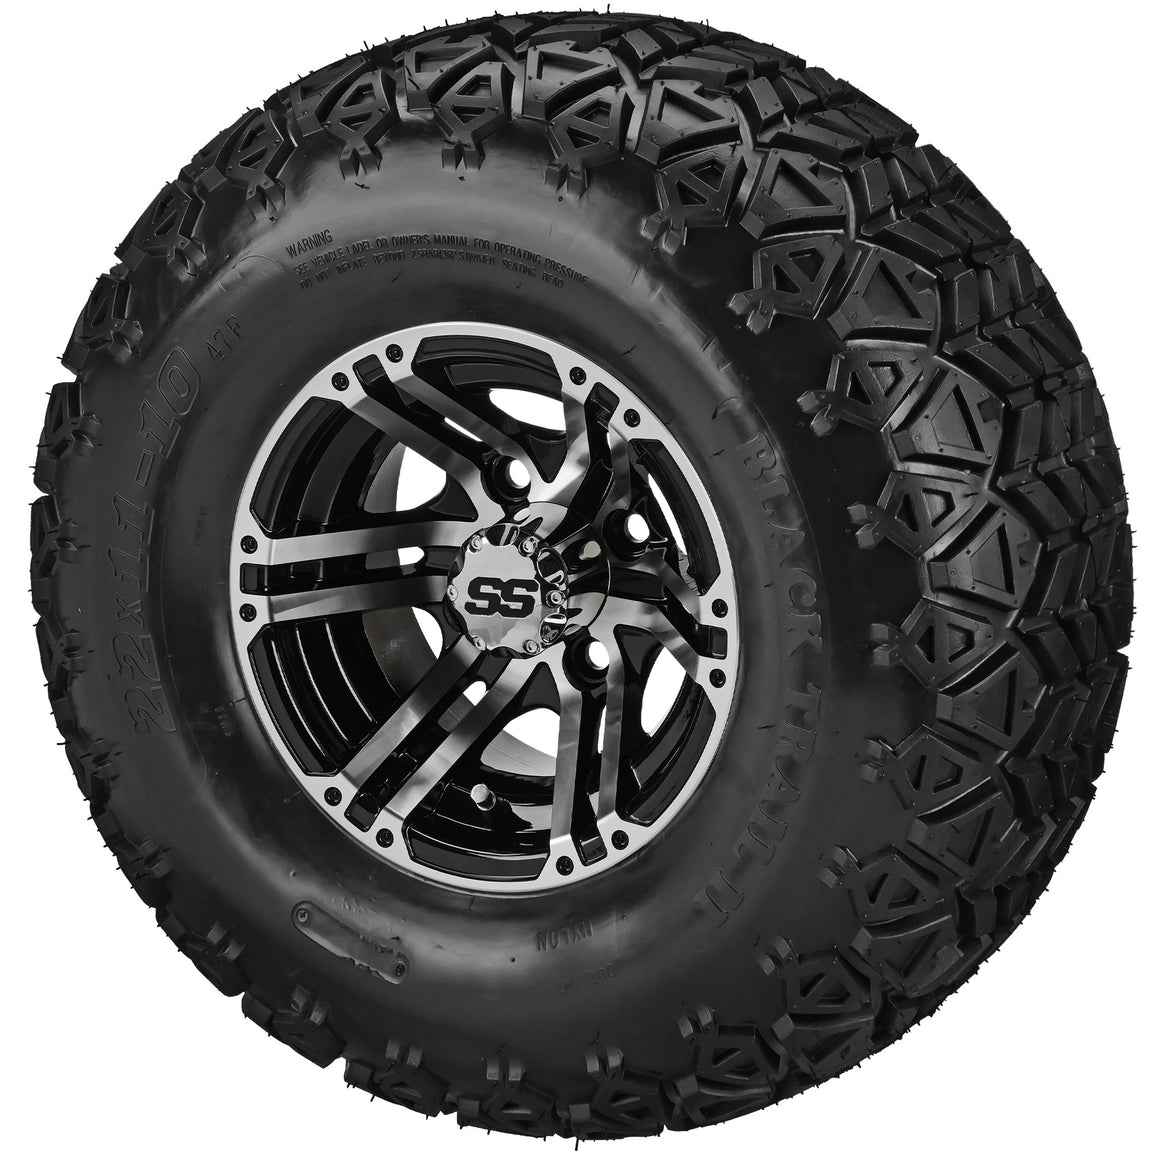 10" Yukon Wheels on Black Trail Tires Combo